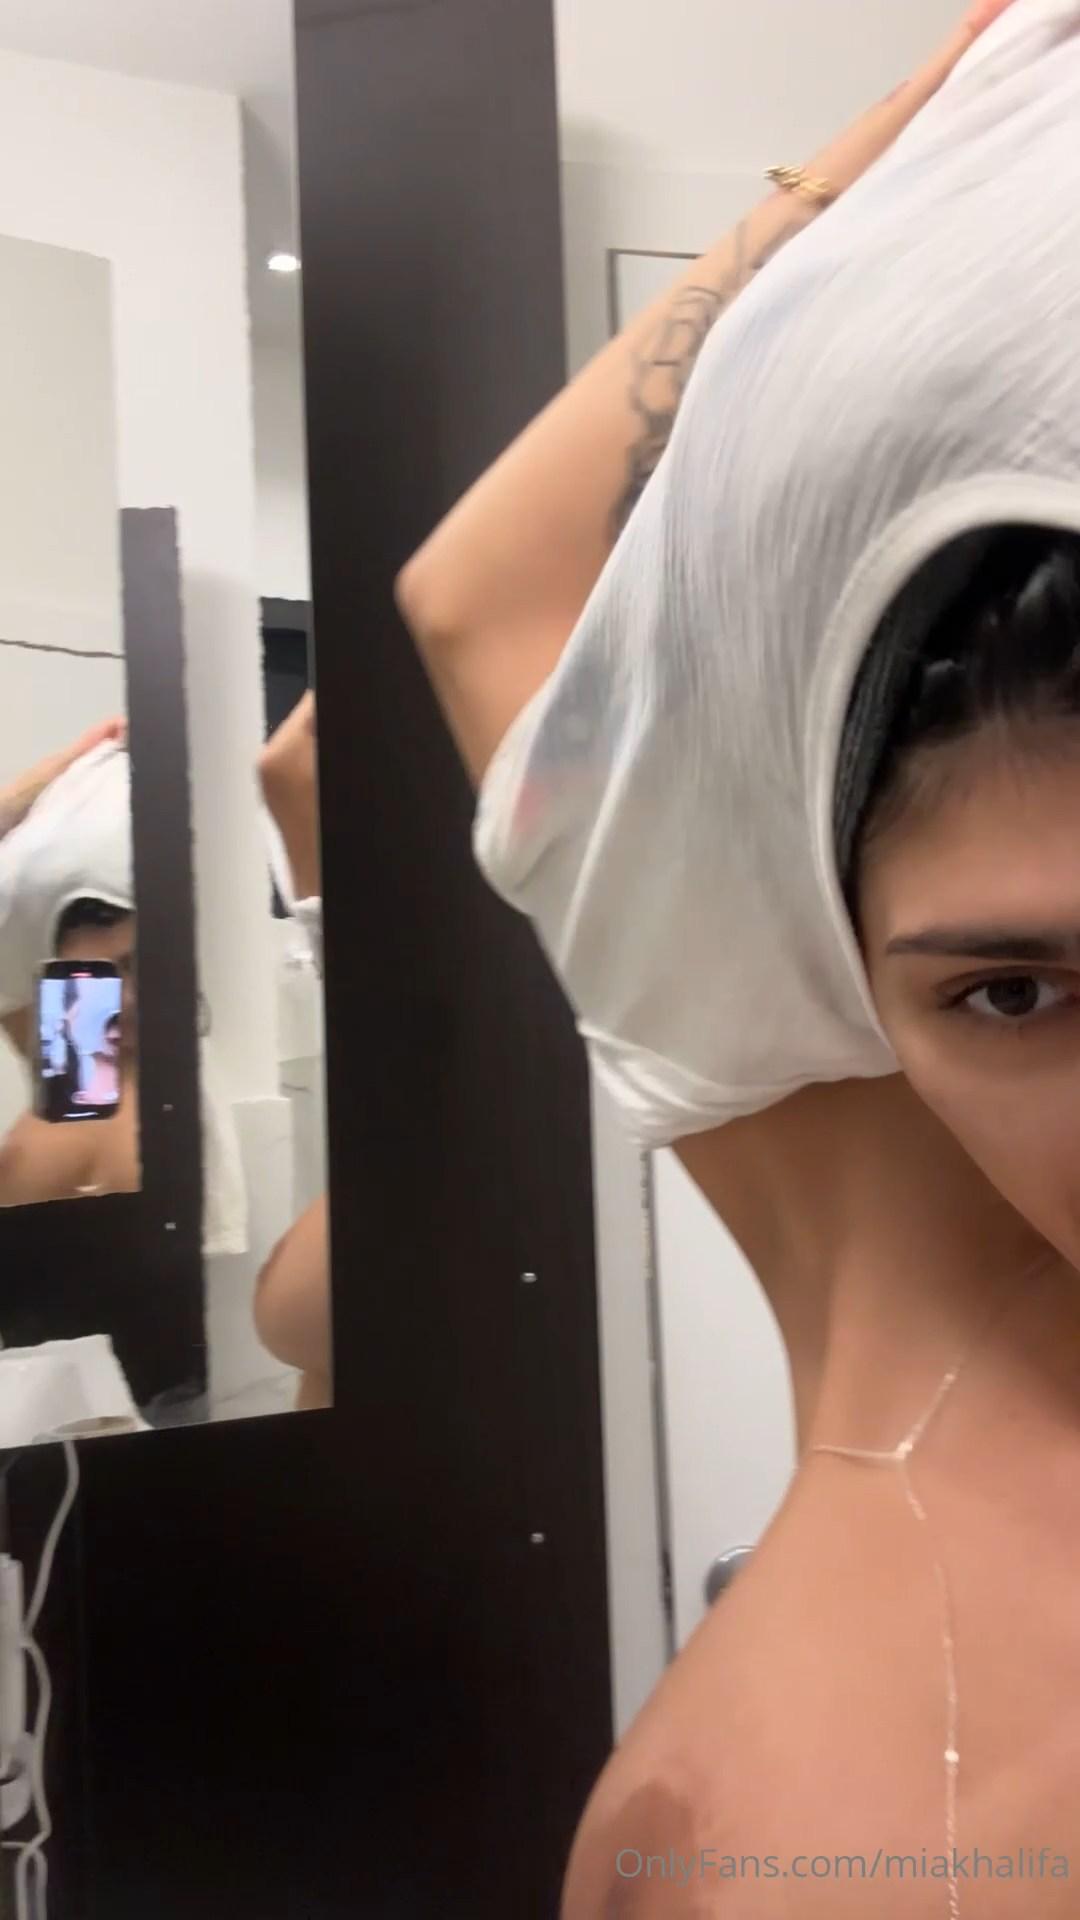 mia khalifa nude dressing onlyfans video leaked mfshii